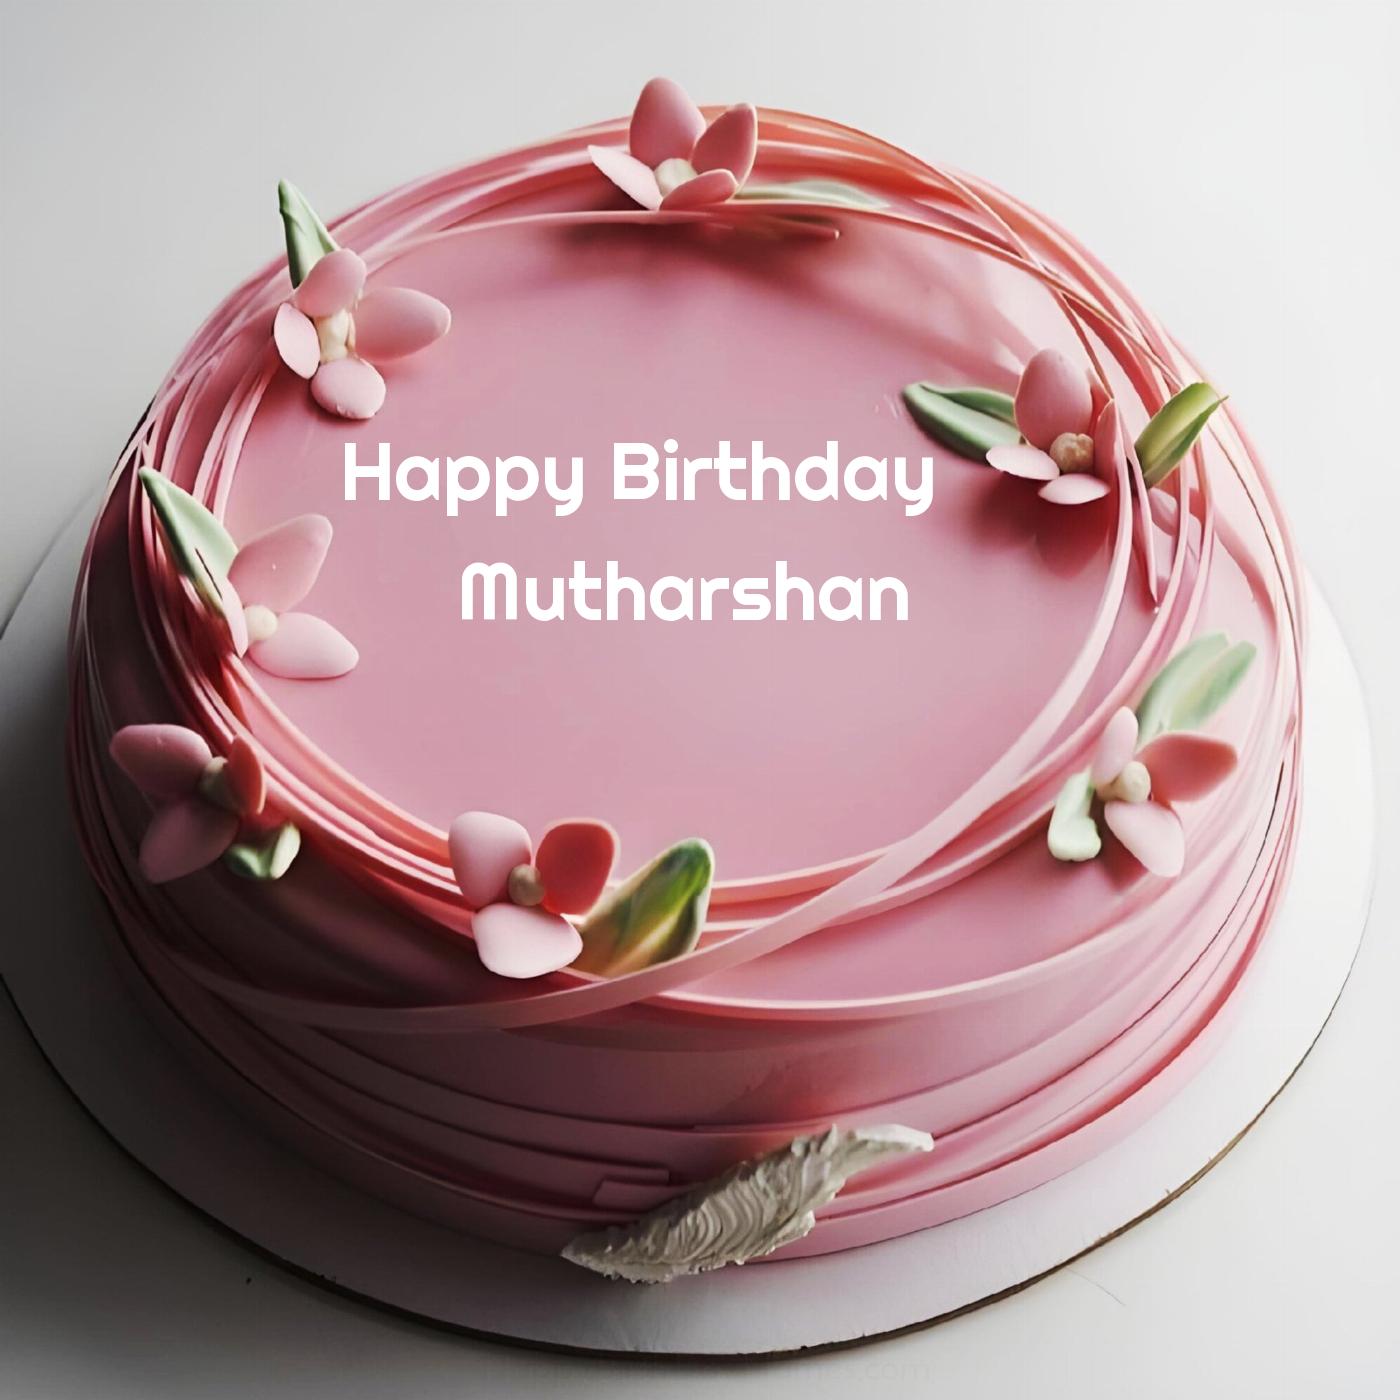 Happy Birthday Mutharshan Pink Flowers Cake